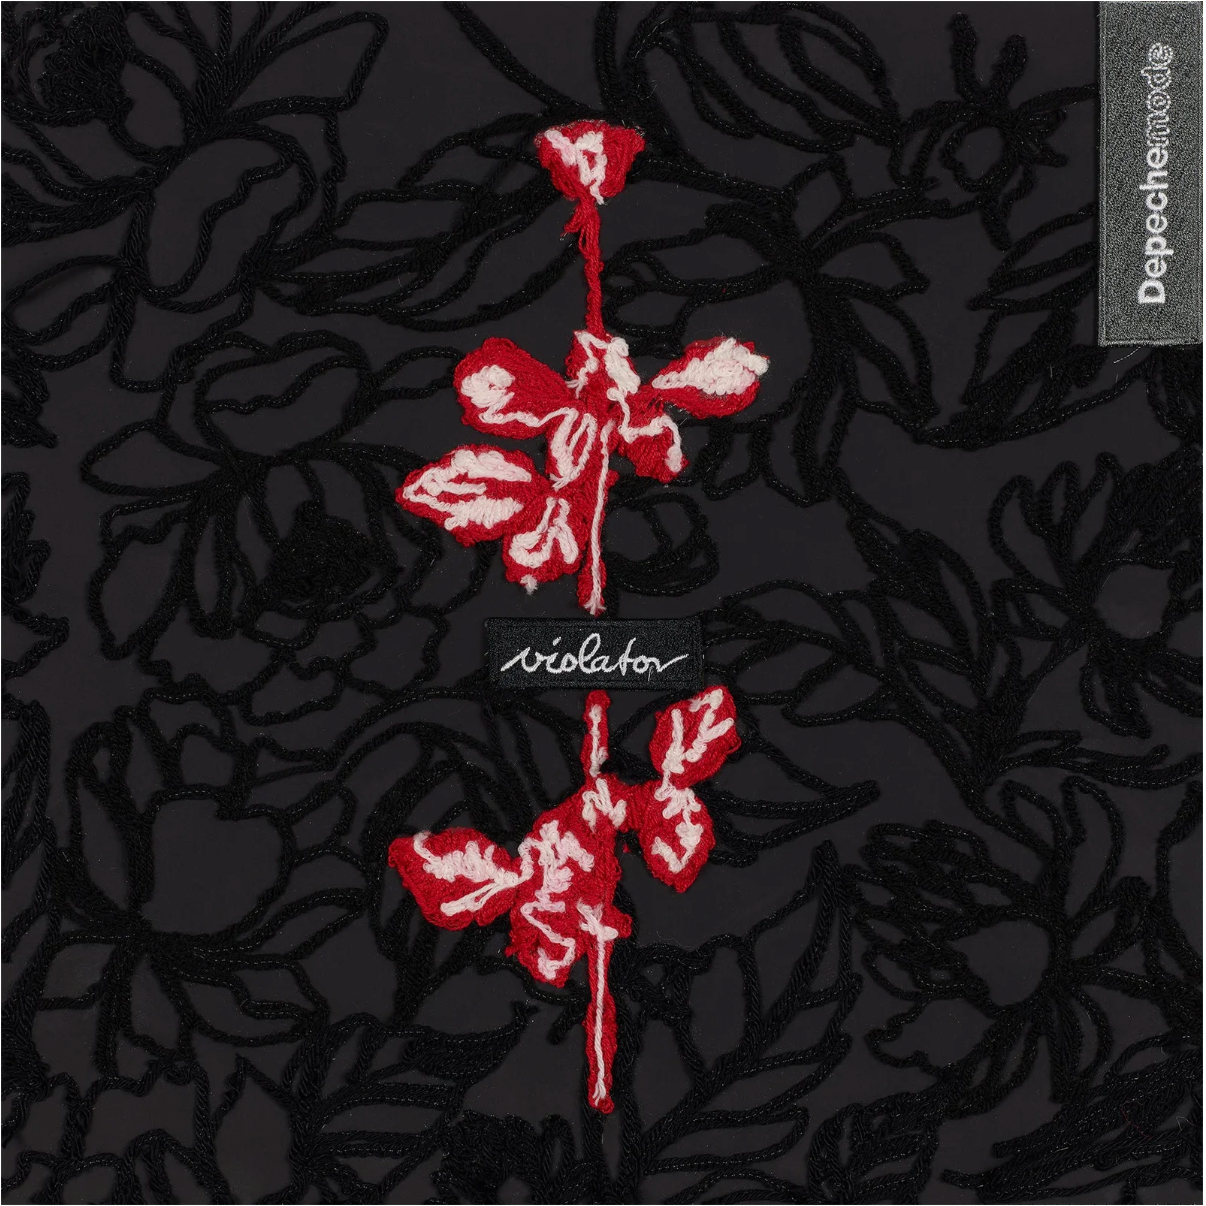 Violator, Depeche Mode by Stephen Wilson (12x12x2")